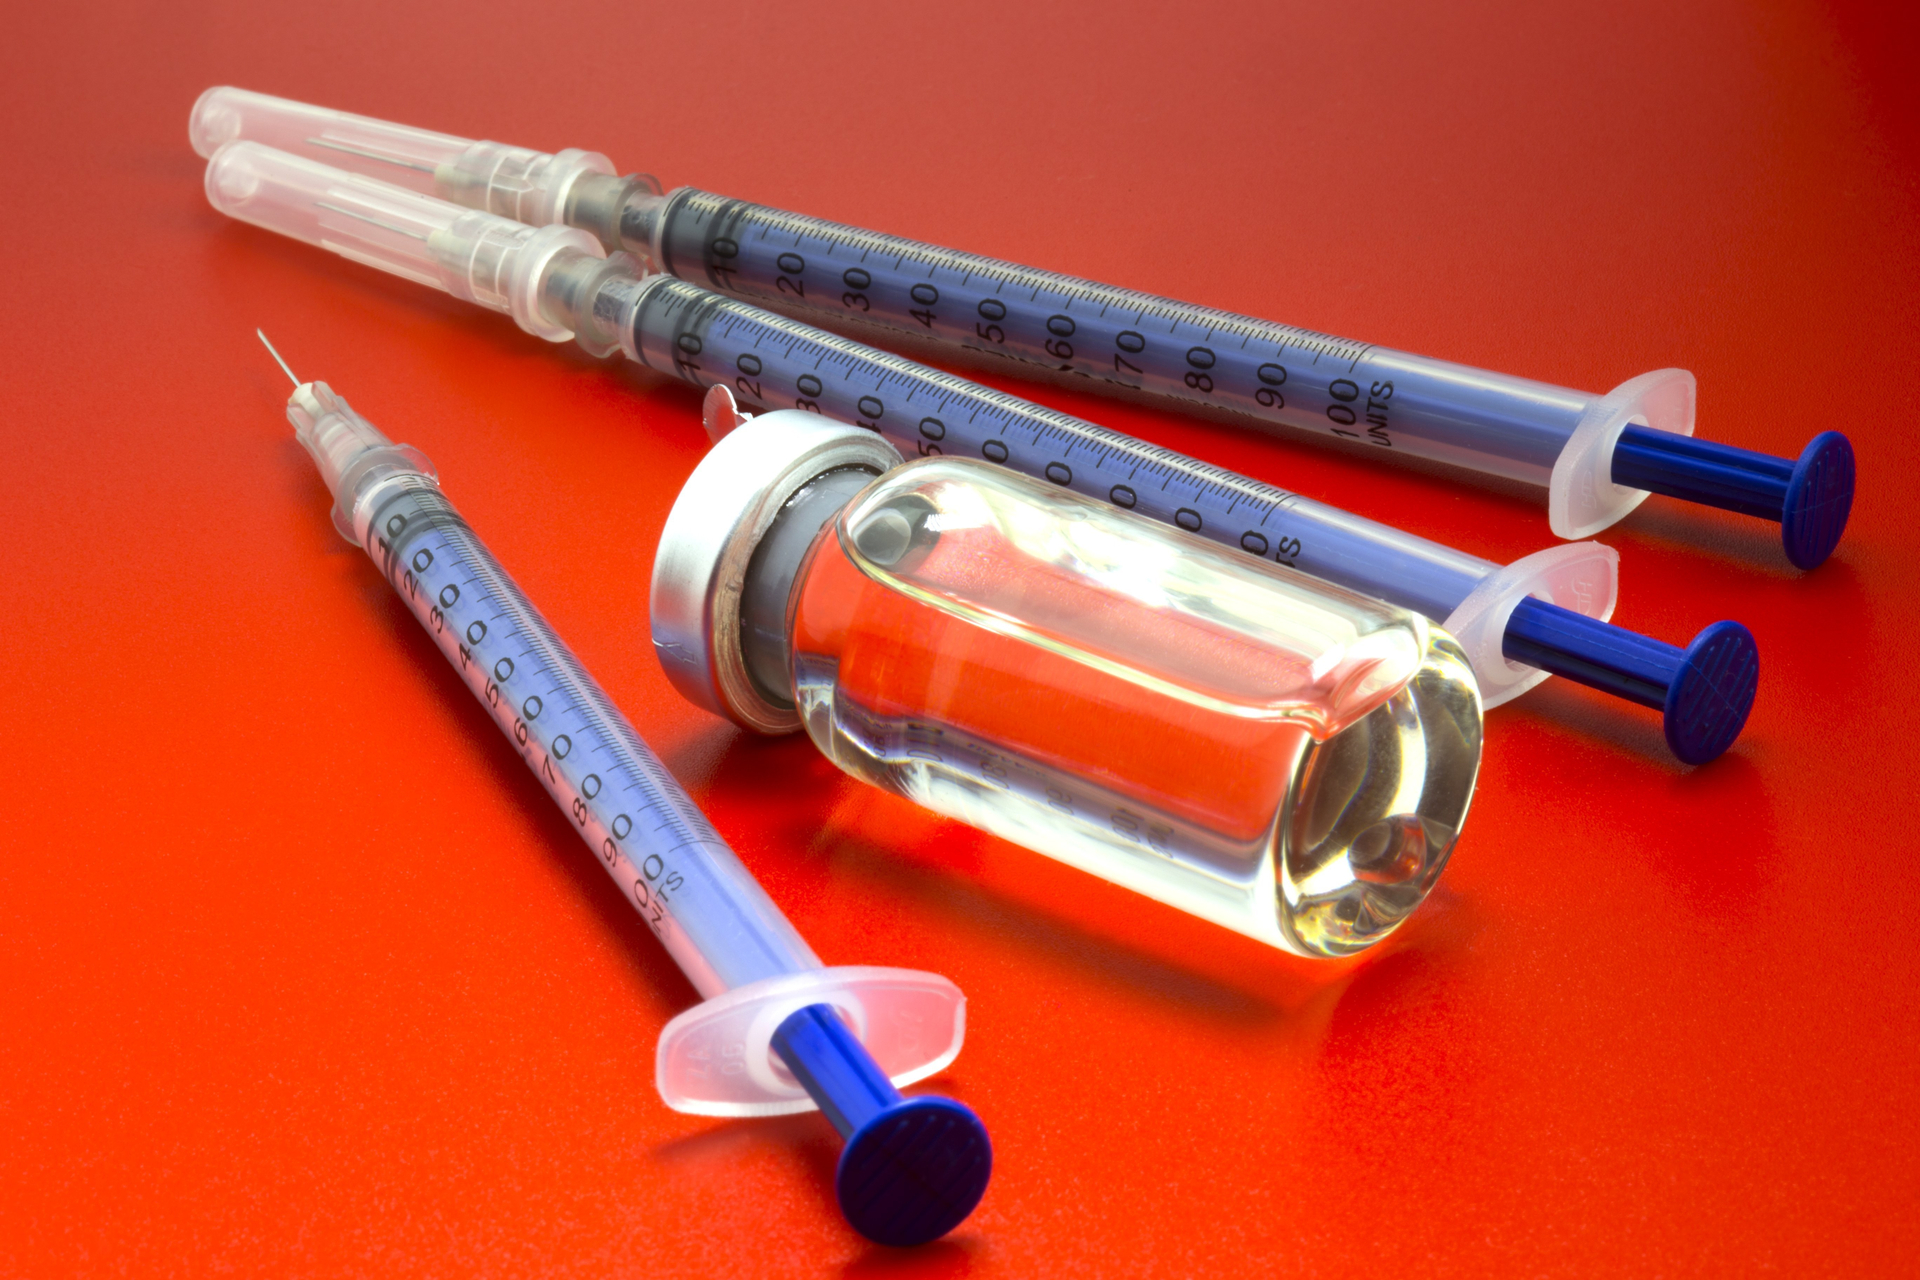 Global Syringe Market